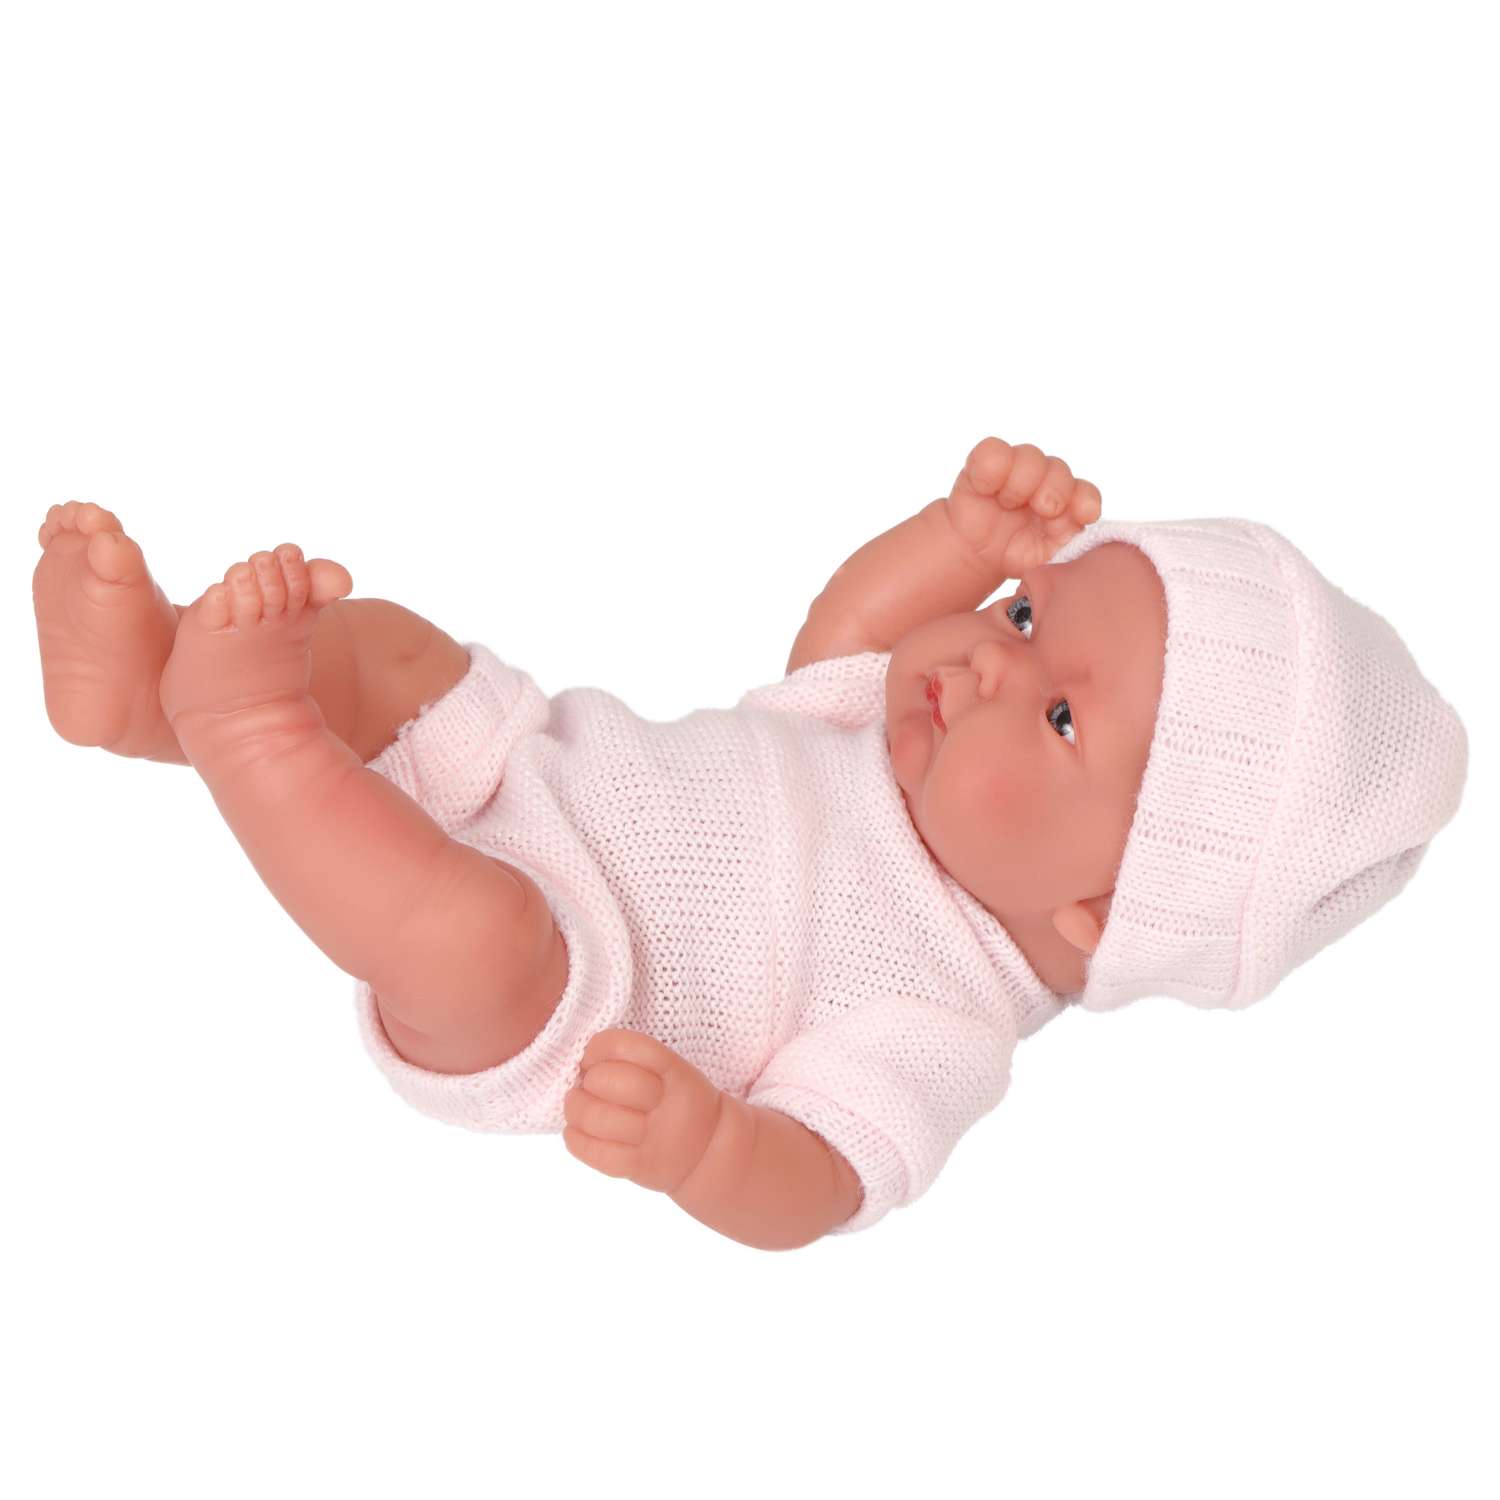 Кукла пупс Antonio Juan Реборн Карла в розовом 26 см виниловая 40070 - фото 9